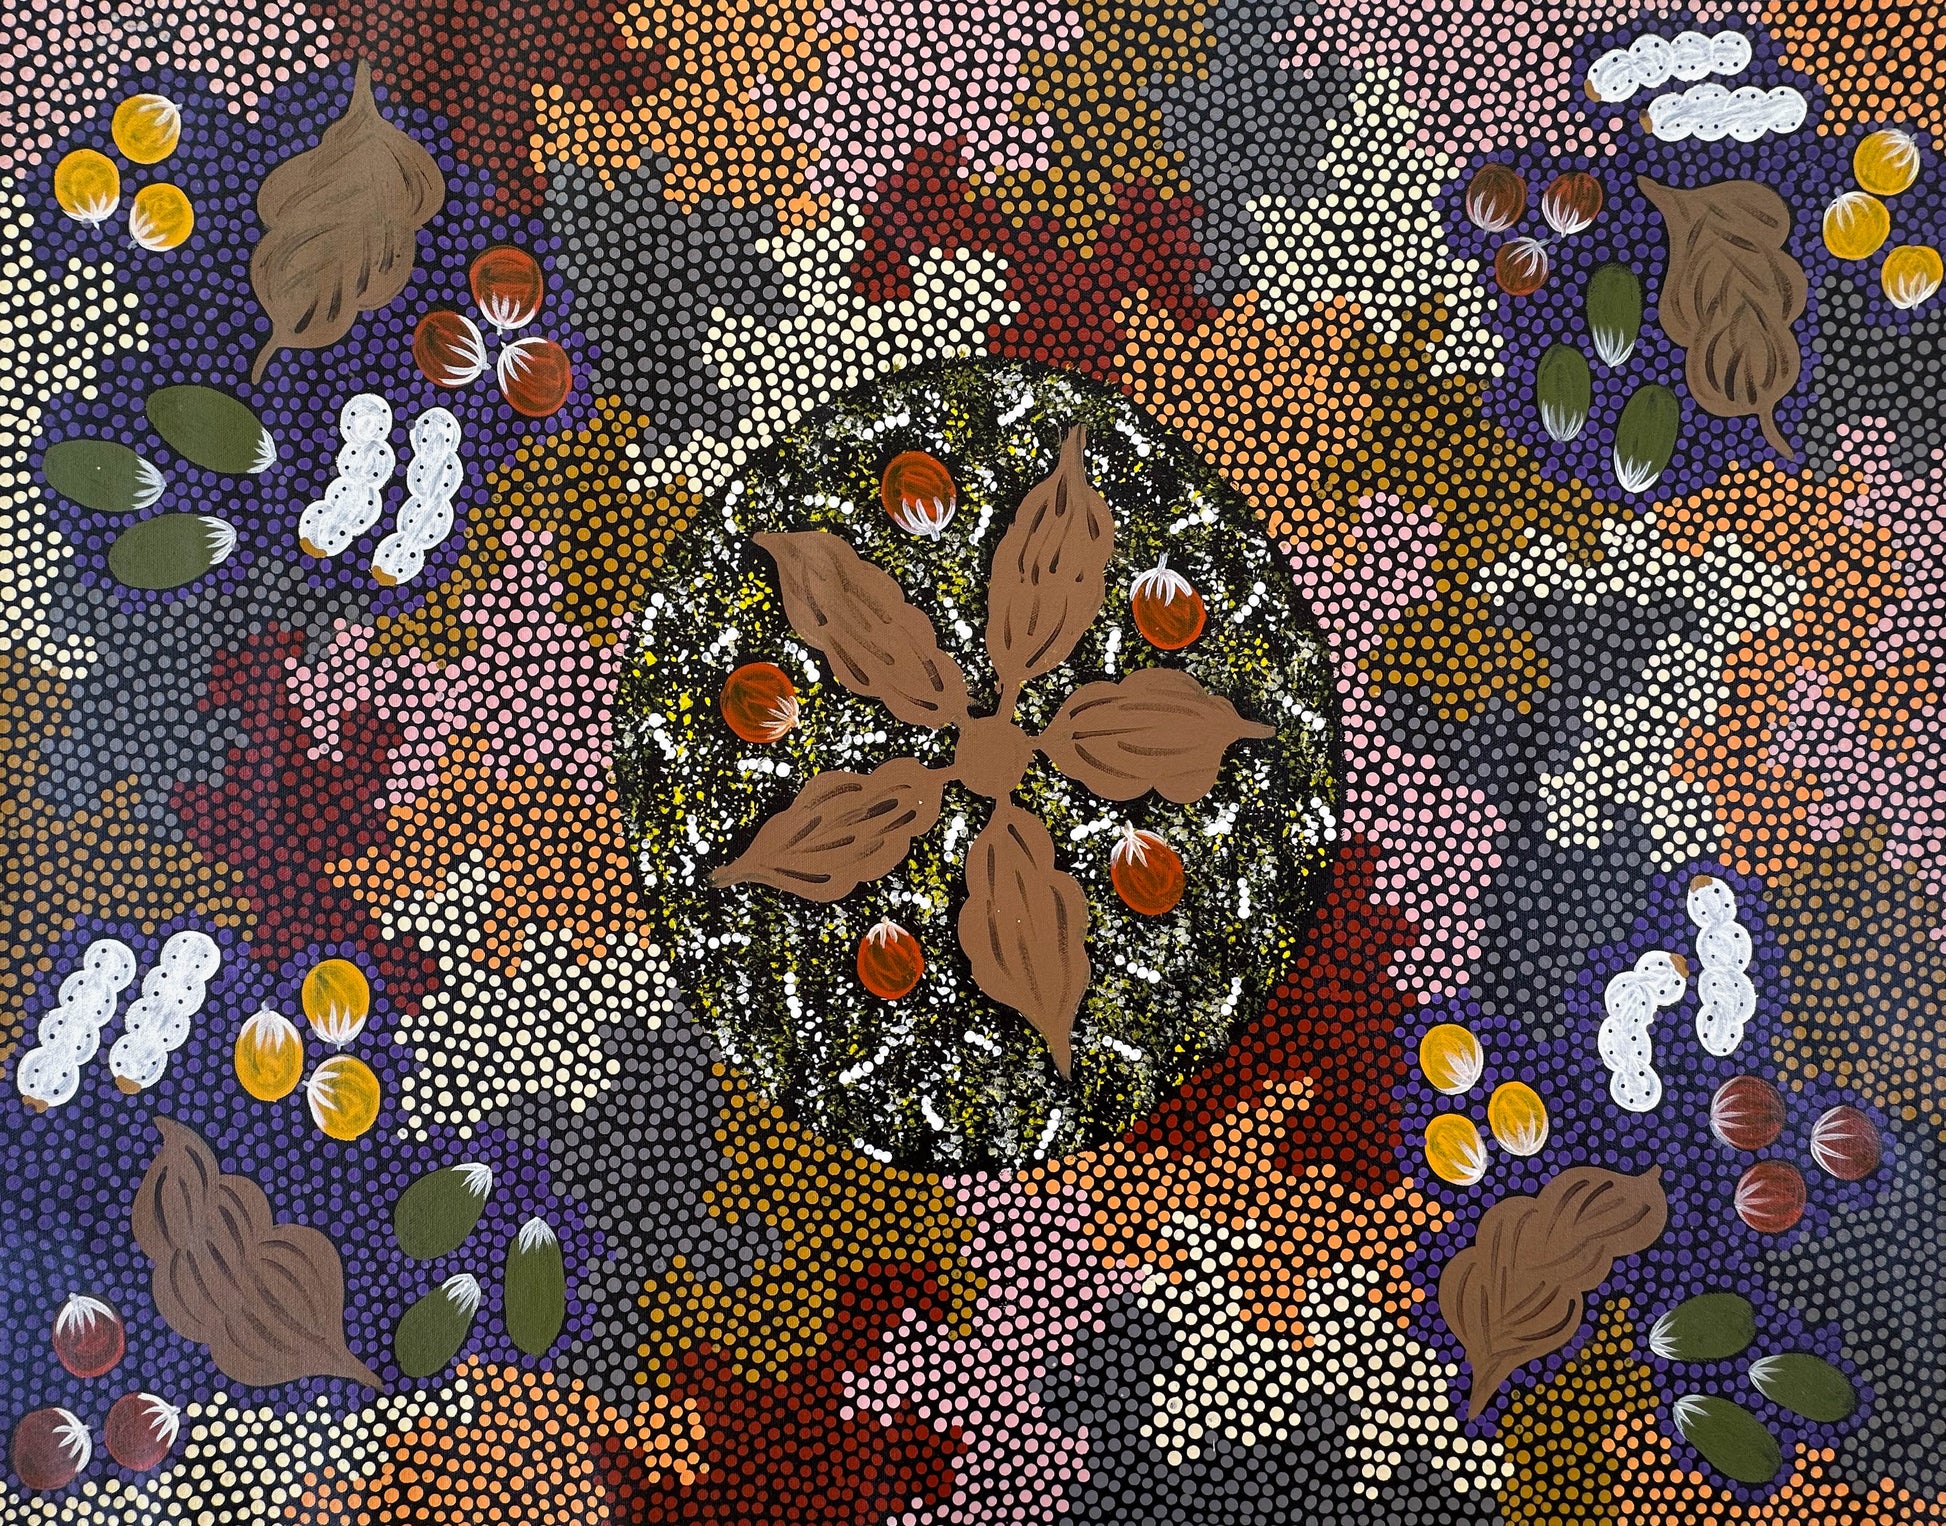 Patsy Ross + Ti Tree + Indigenous Art + Aboriginal Art + Australian Art + Bush Tucker + Dreaming + Witchetty Grub + Bush Berries + Bush Banana + Bush Tomato + Darwin Based Gallery + Dot Art Painting + Dot Painting + 